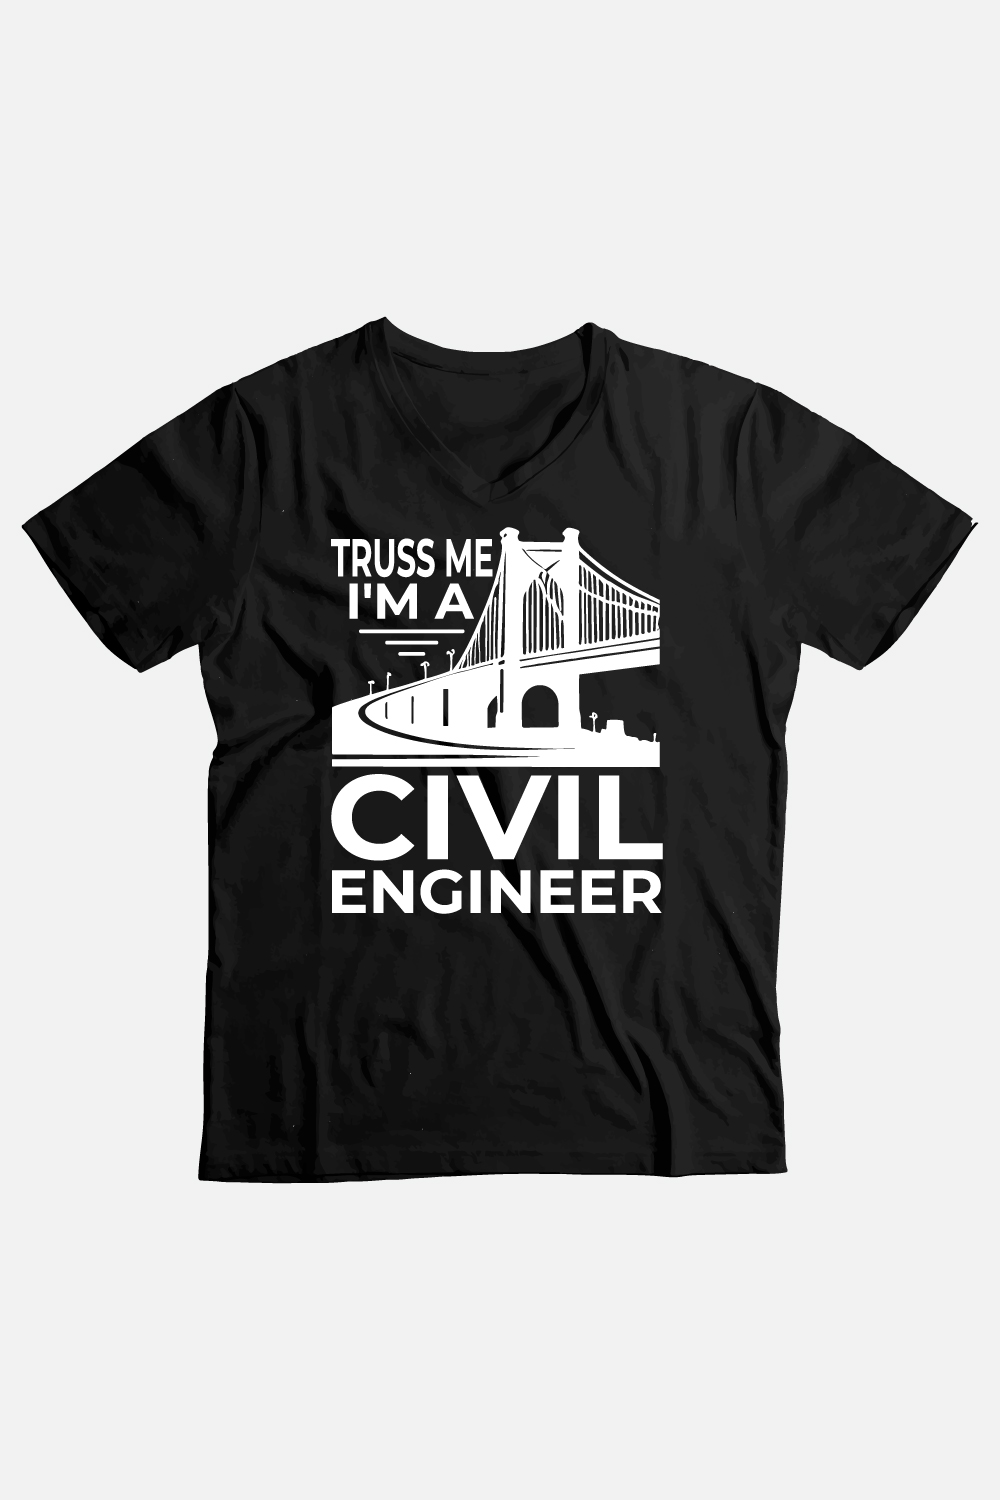 Civil engineer t-shirt template design pinterest preview image.